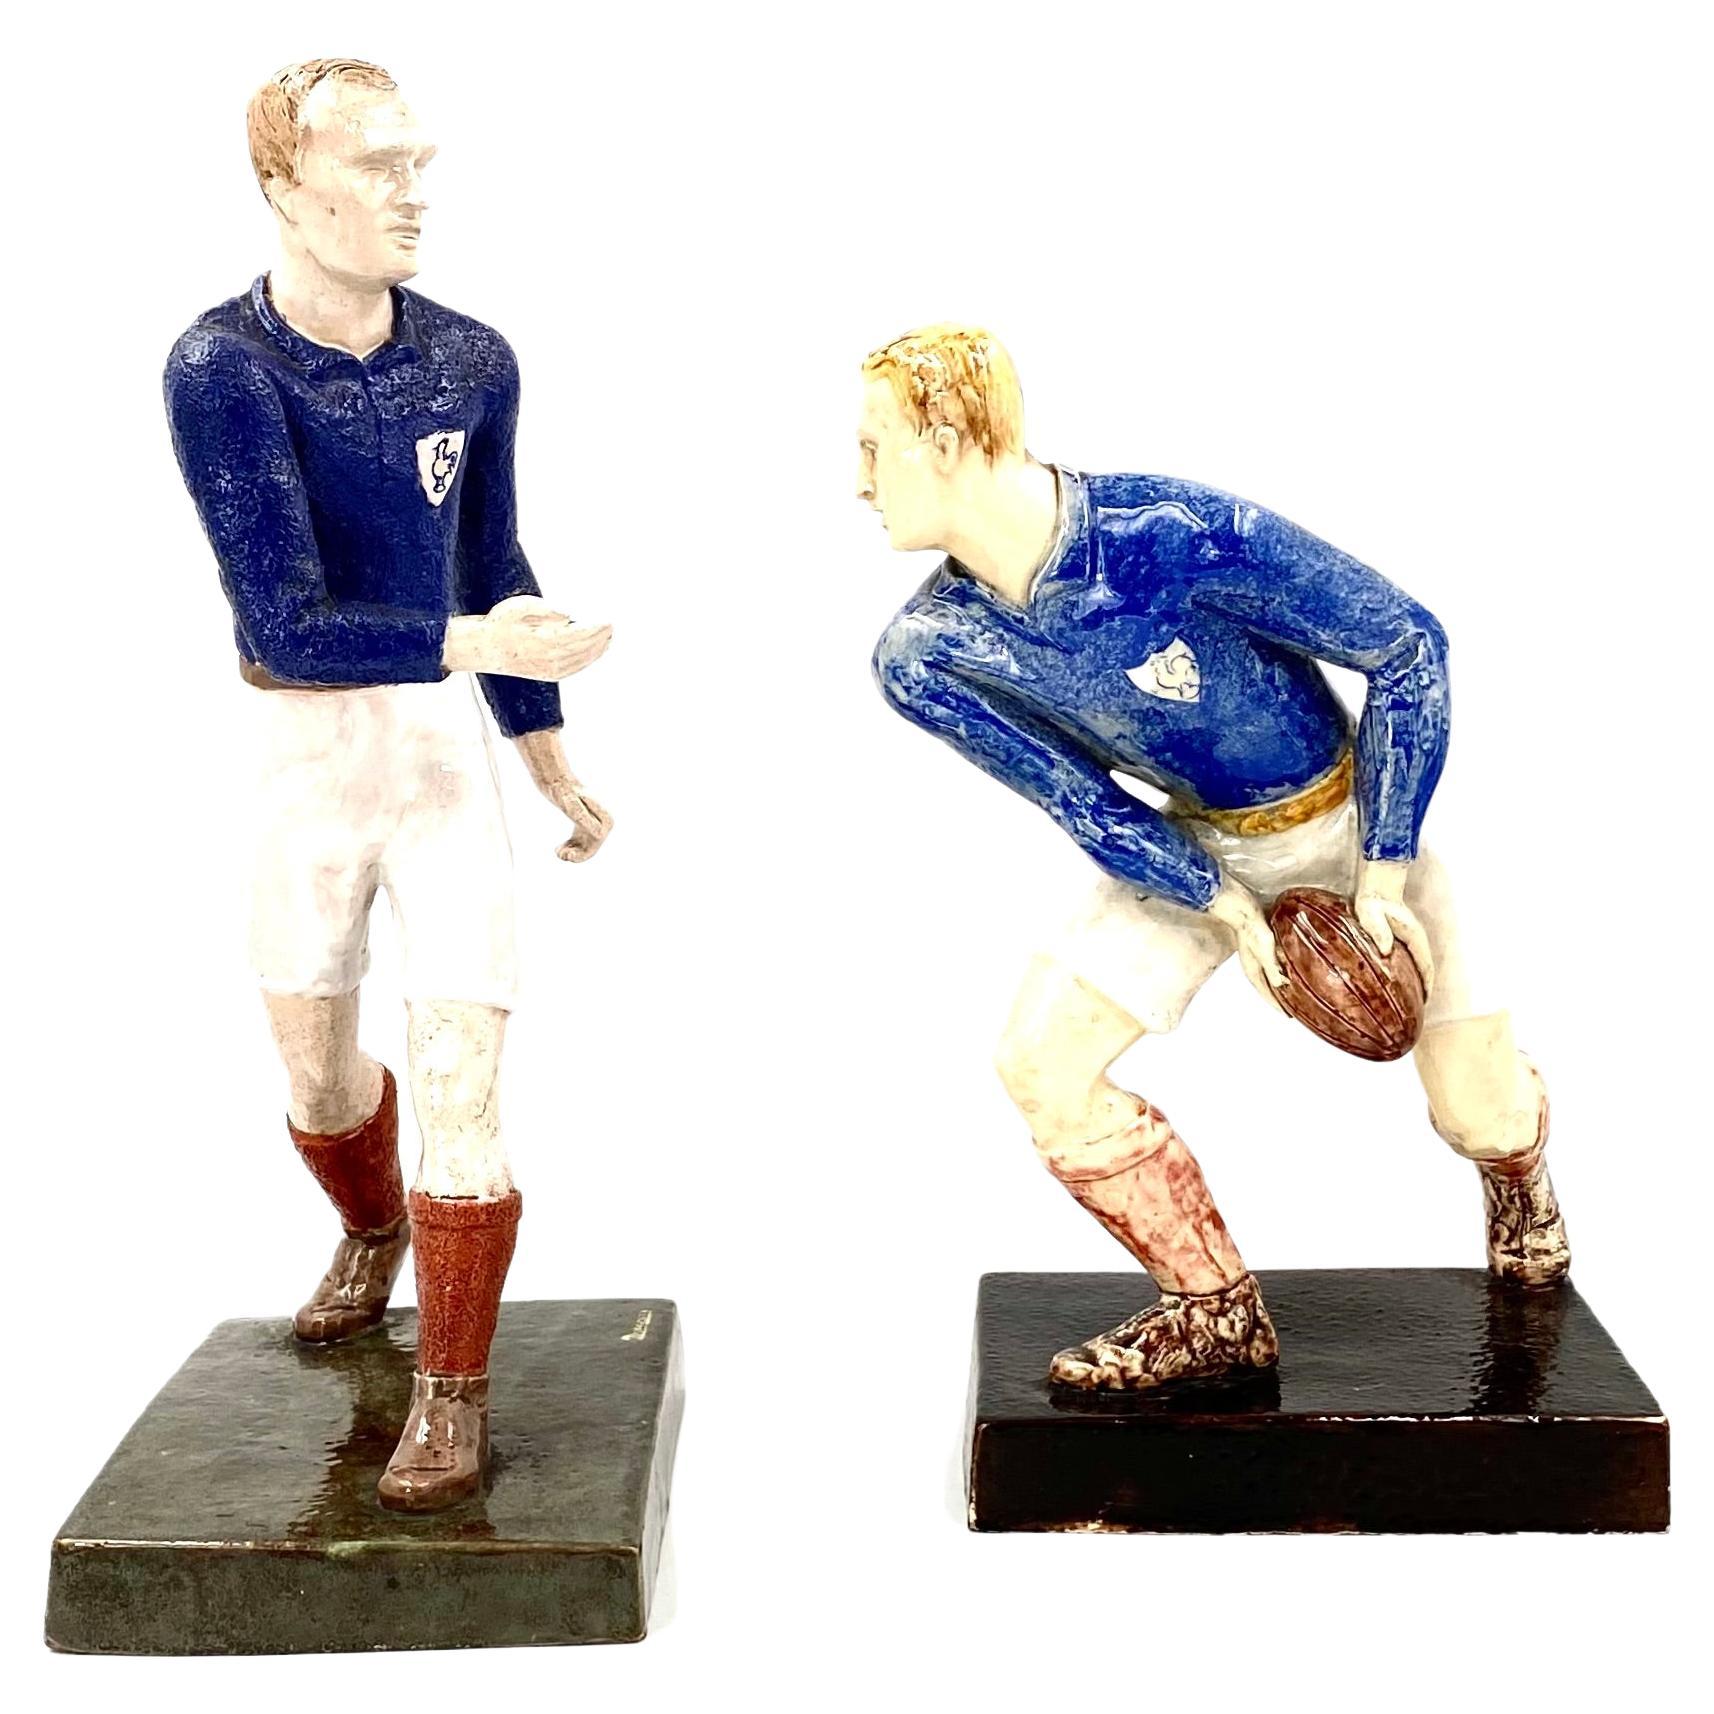 Willy Wuilleumier, Sculptures 'Les Joueurs De Rugby', G.A.M. France, 1940